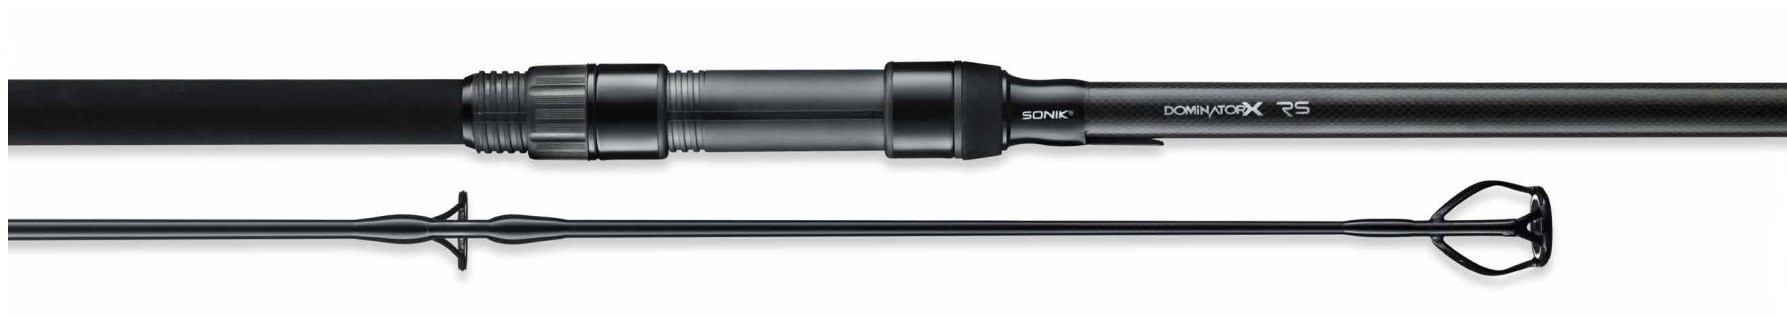 Sonik DOMINATORX RS CARP ROD 12 ft 3.0 lb - 1 week gebruikt